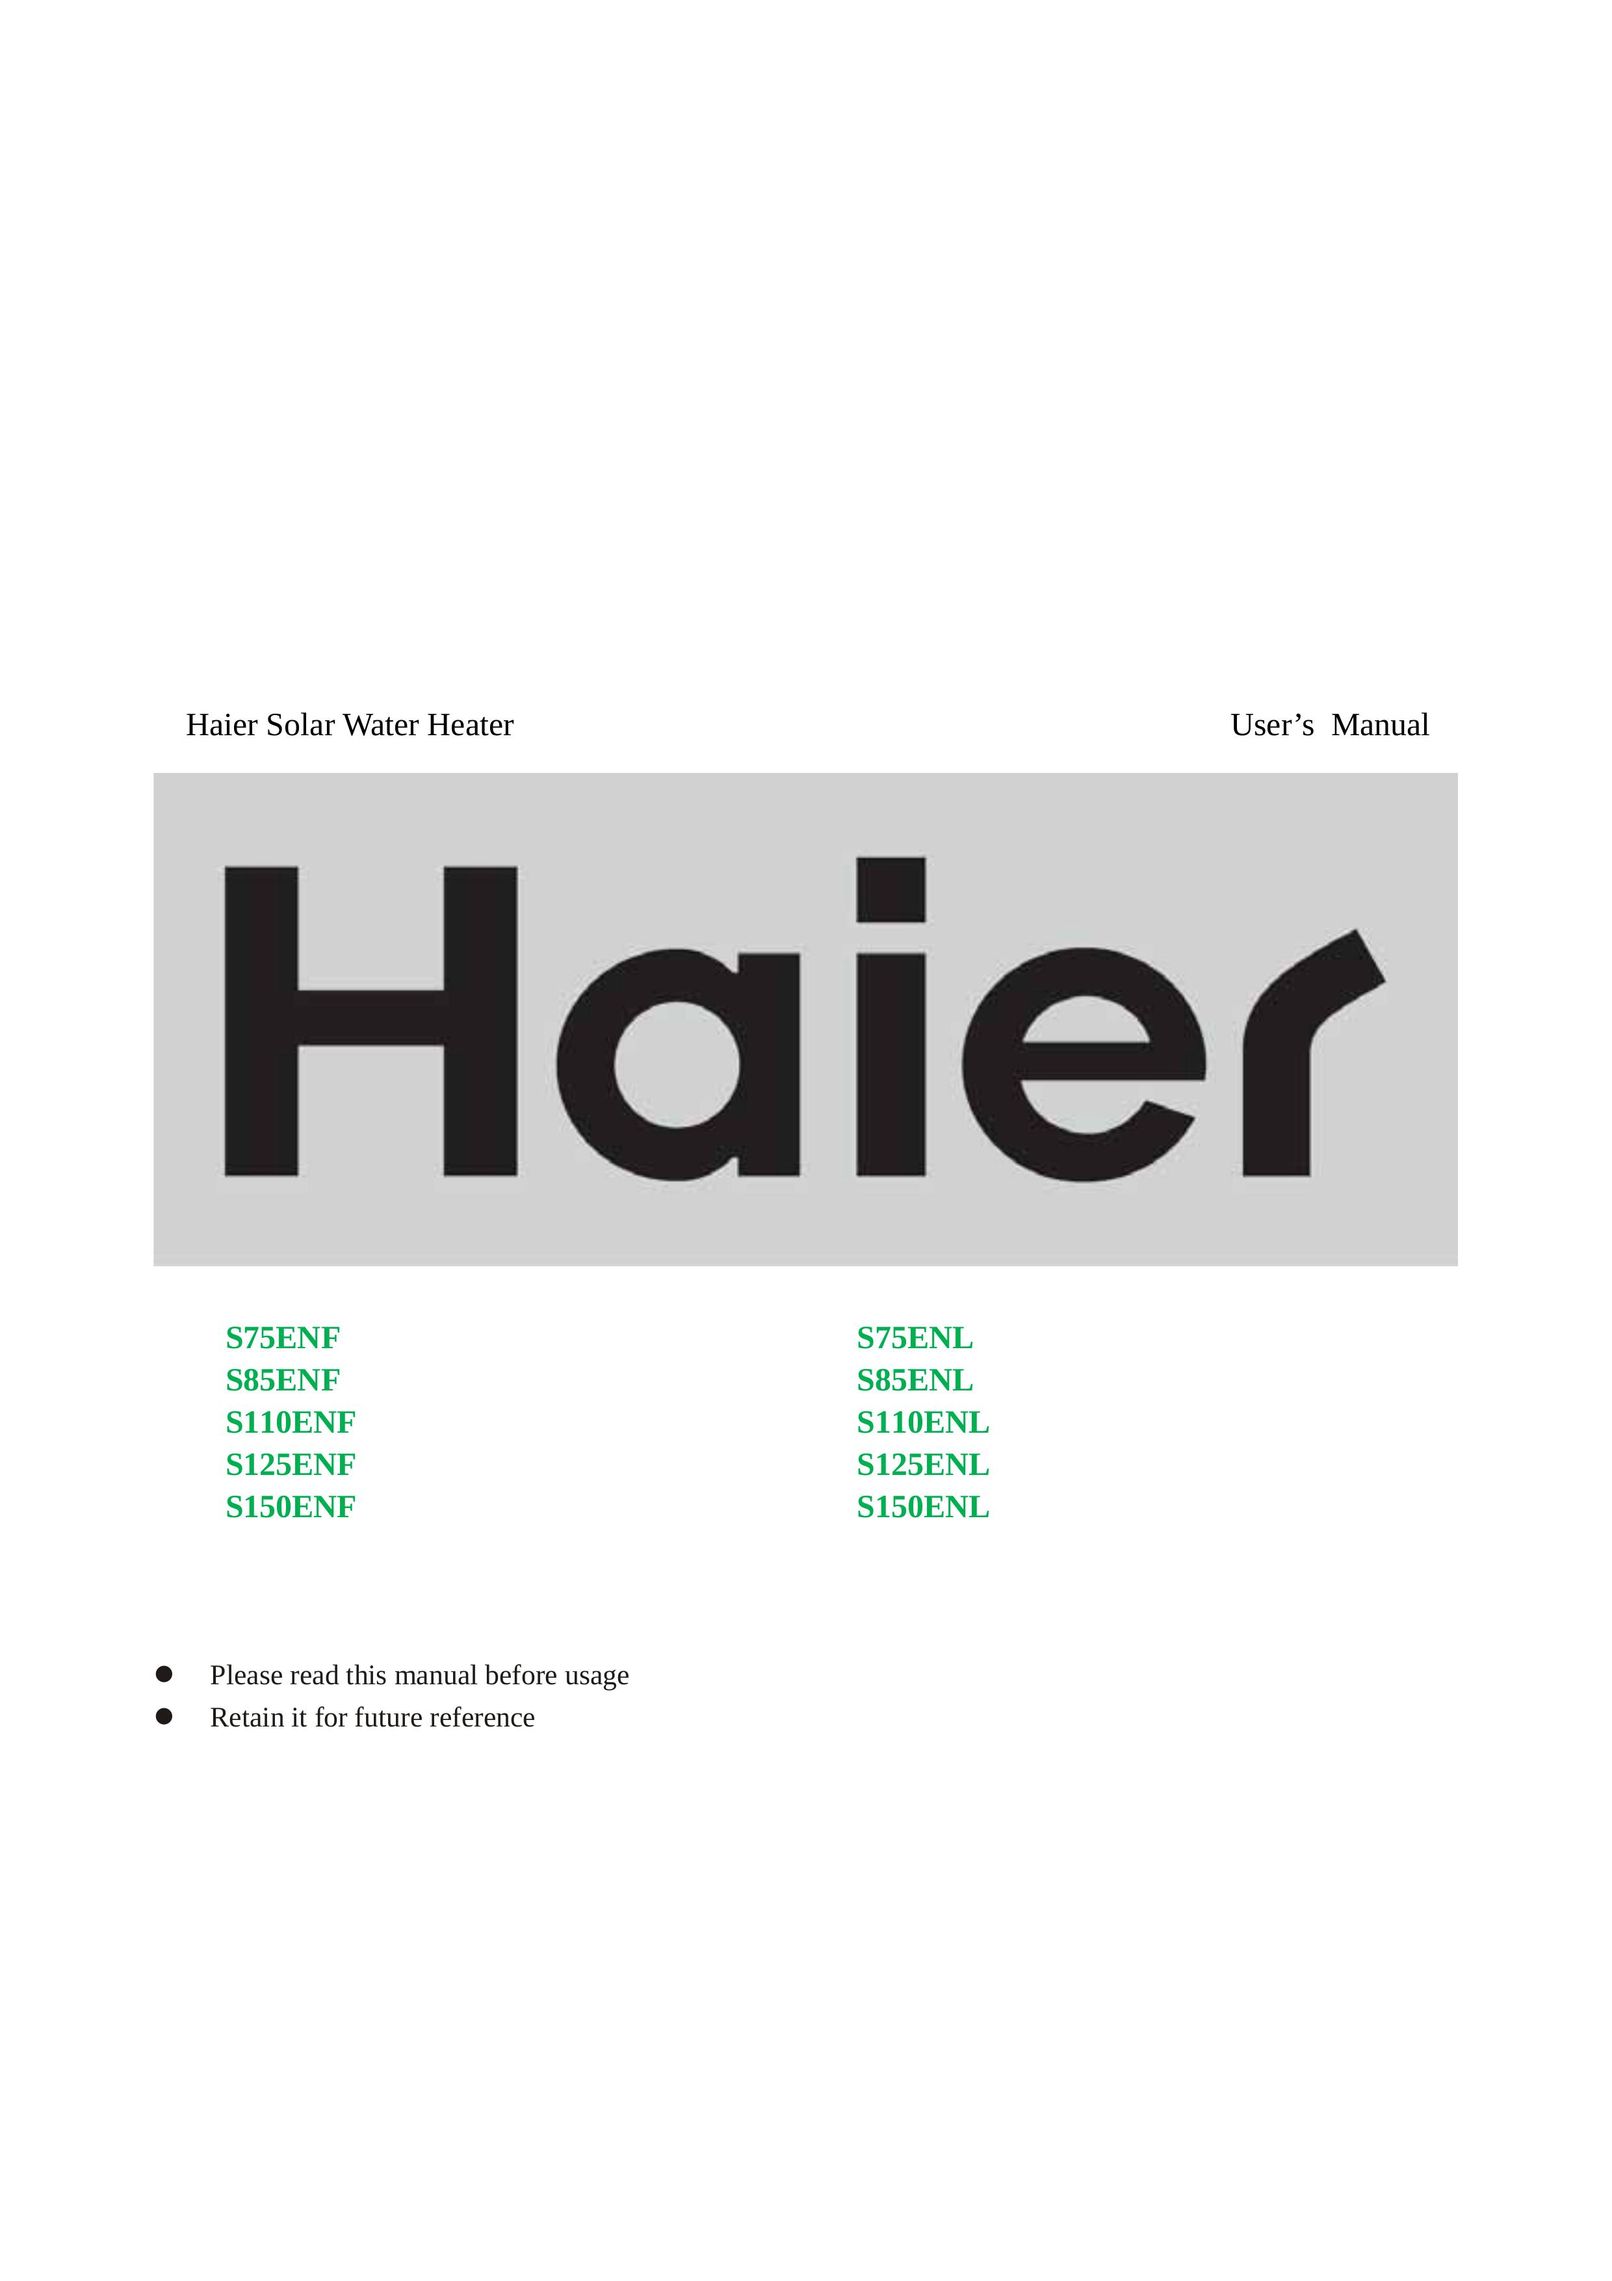 Haier S110ENL Water Heater User Manual